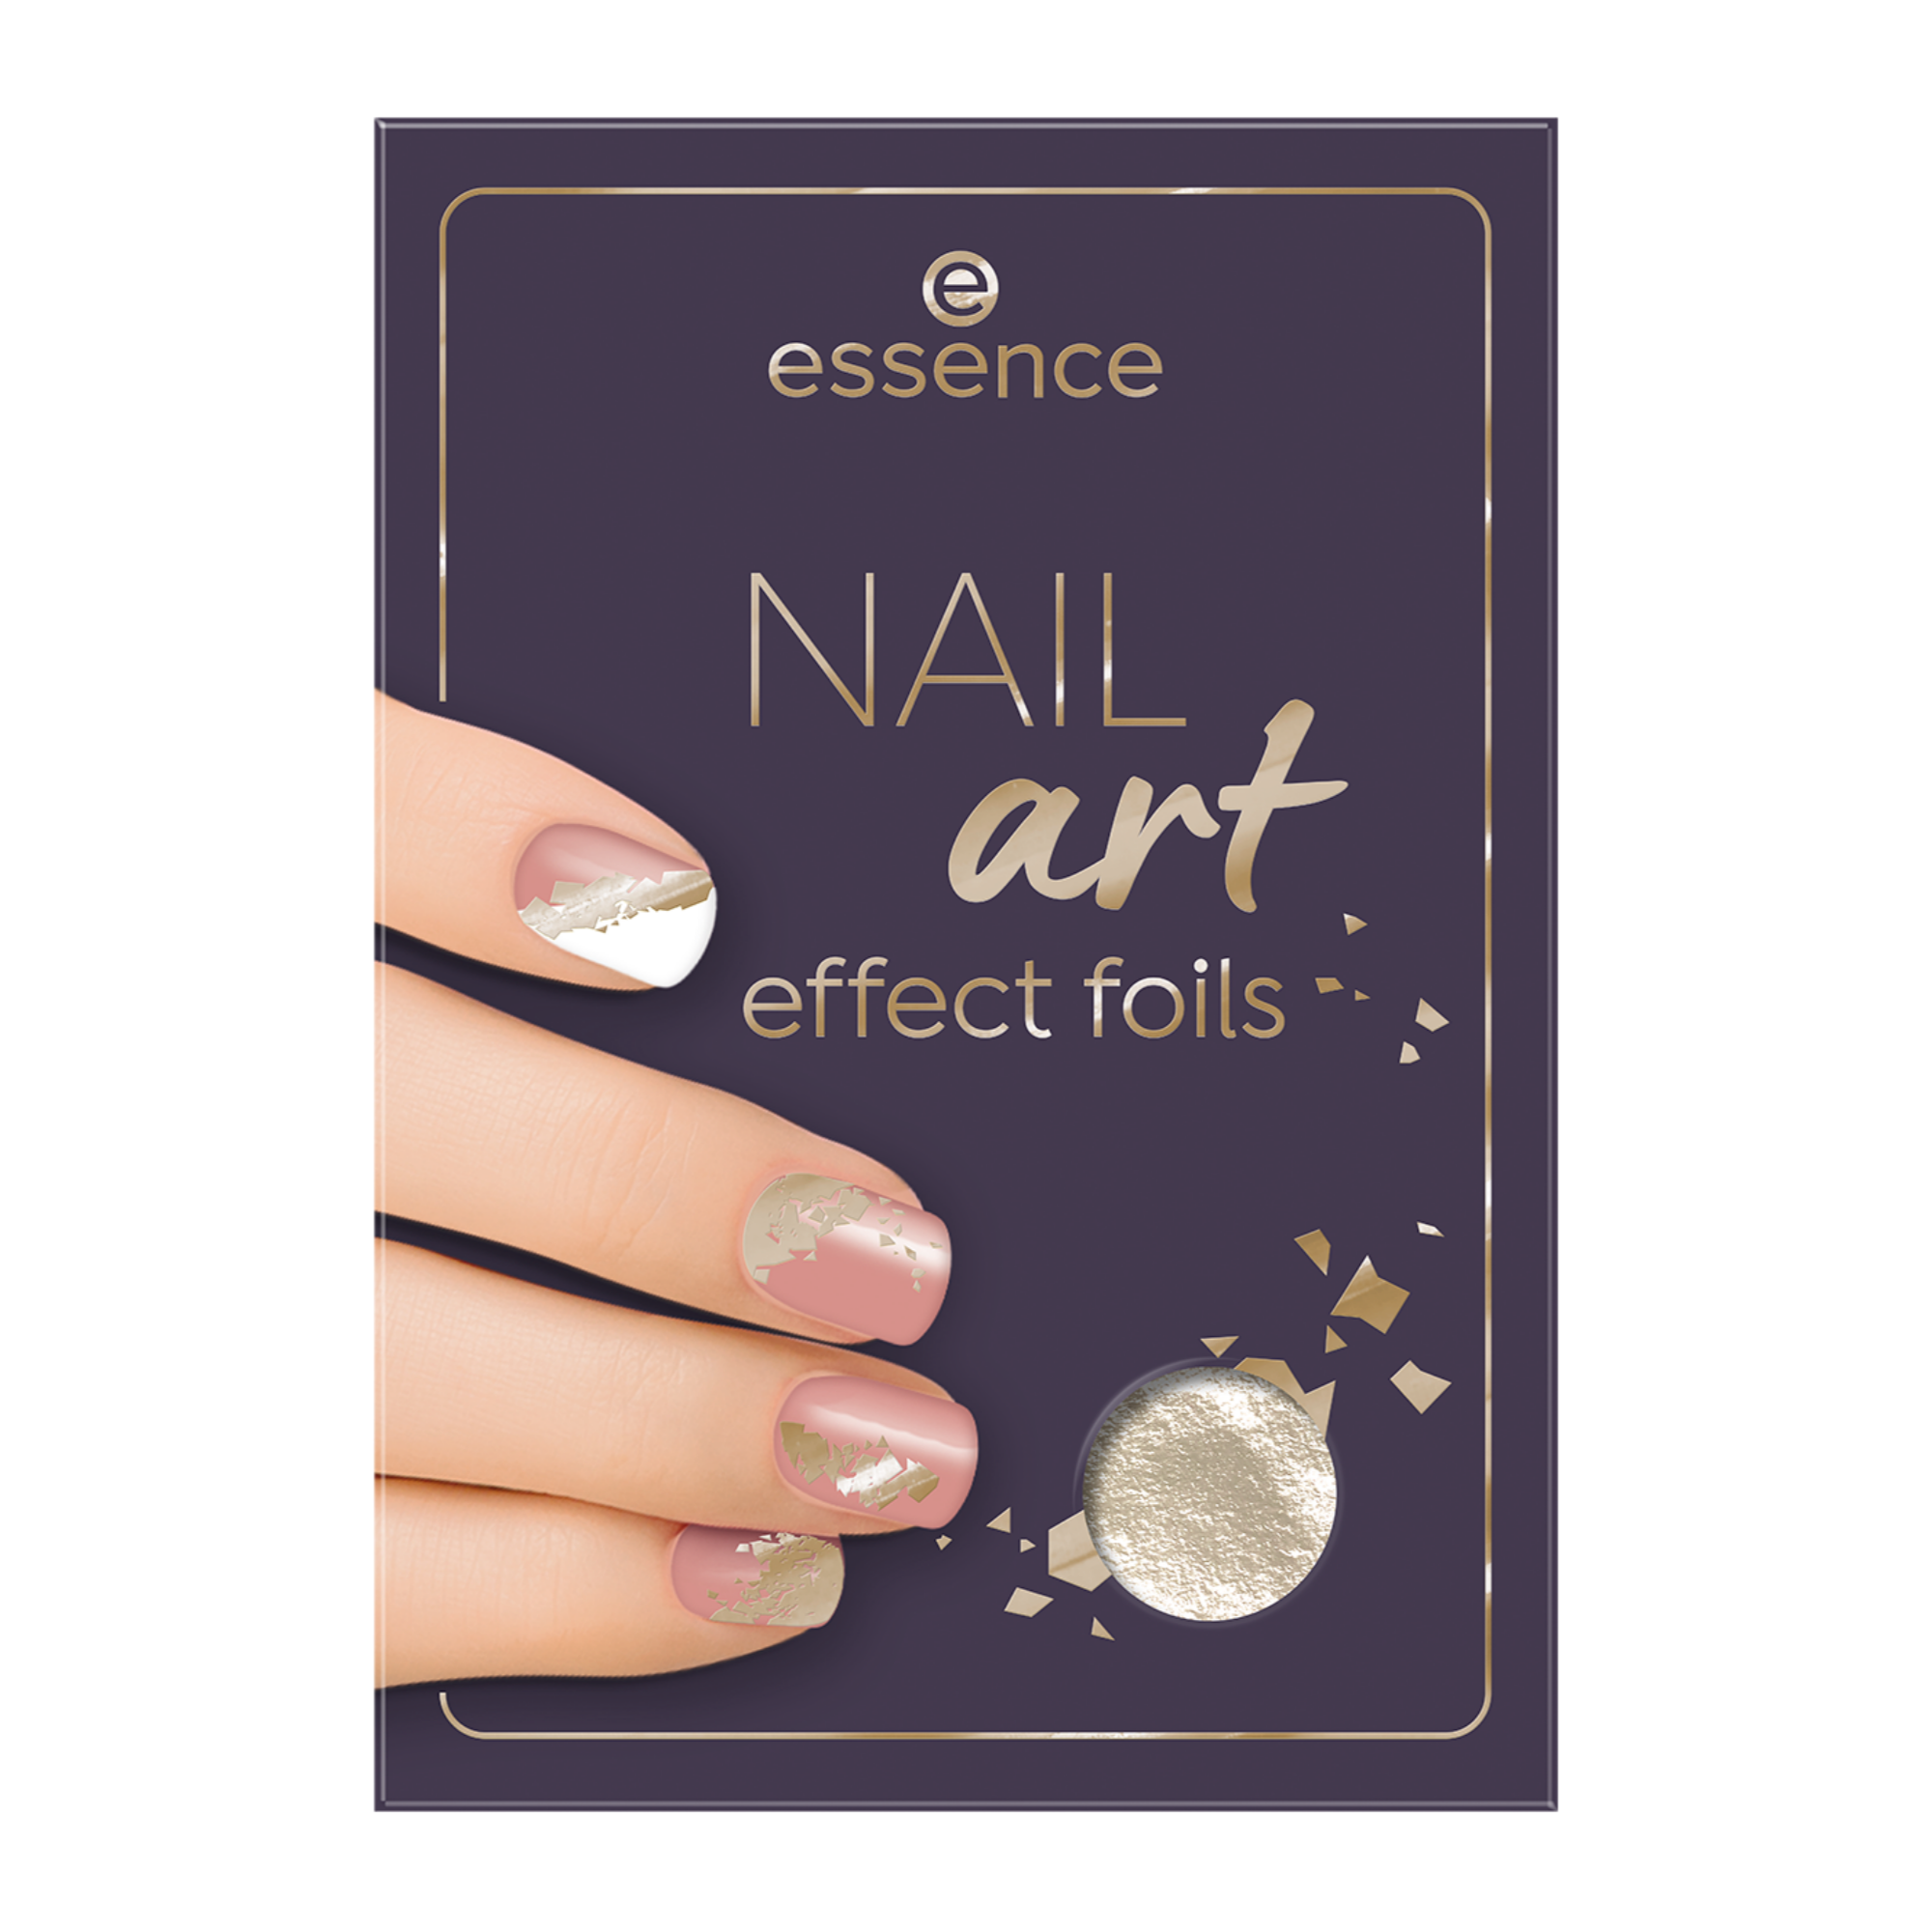 NAIL art effect foils adesivo per unghie